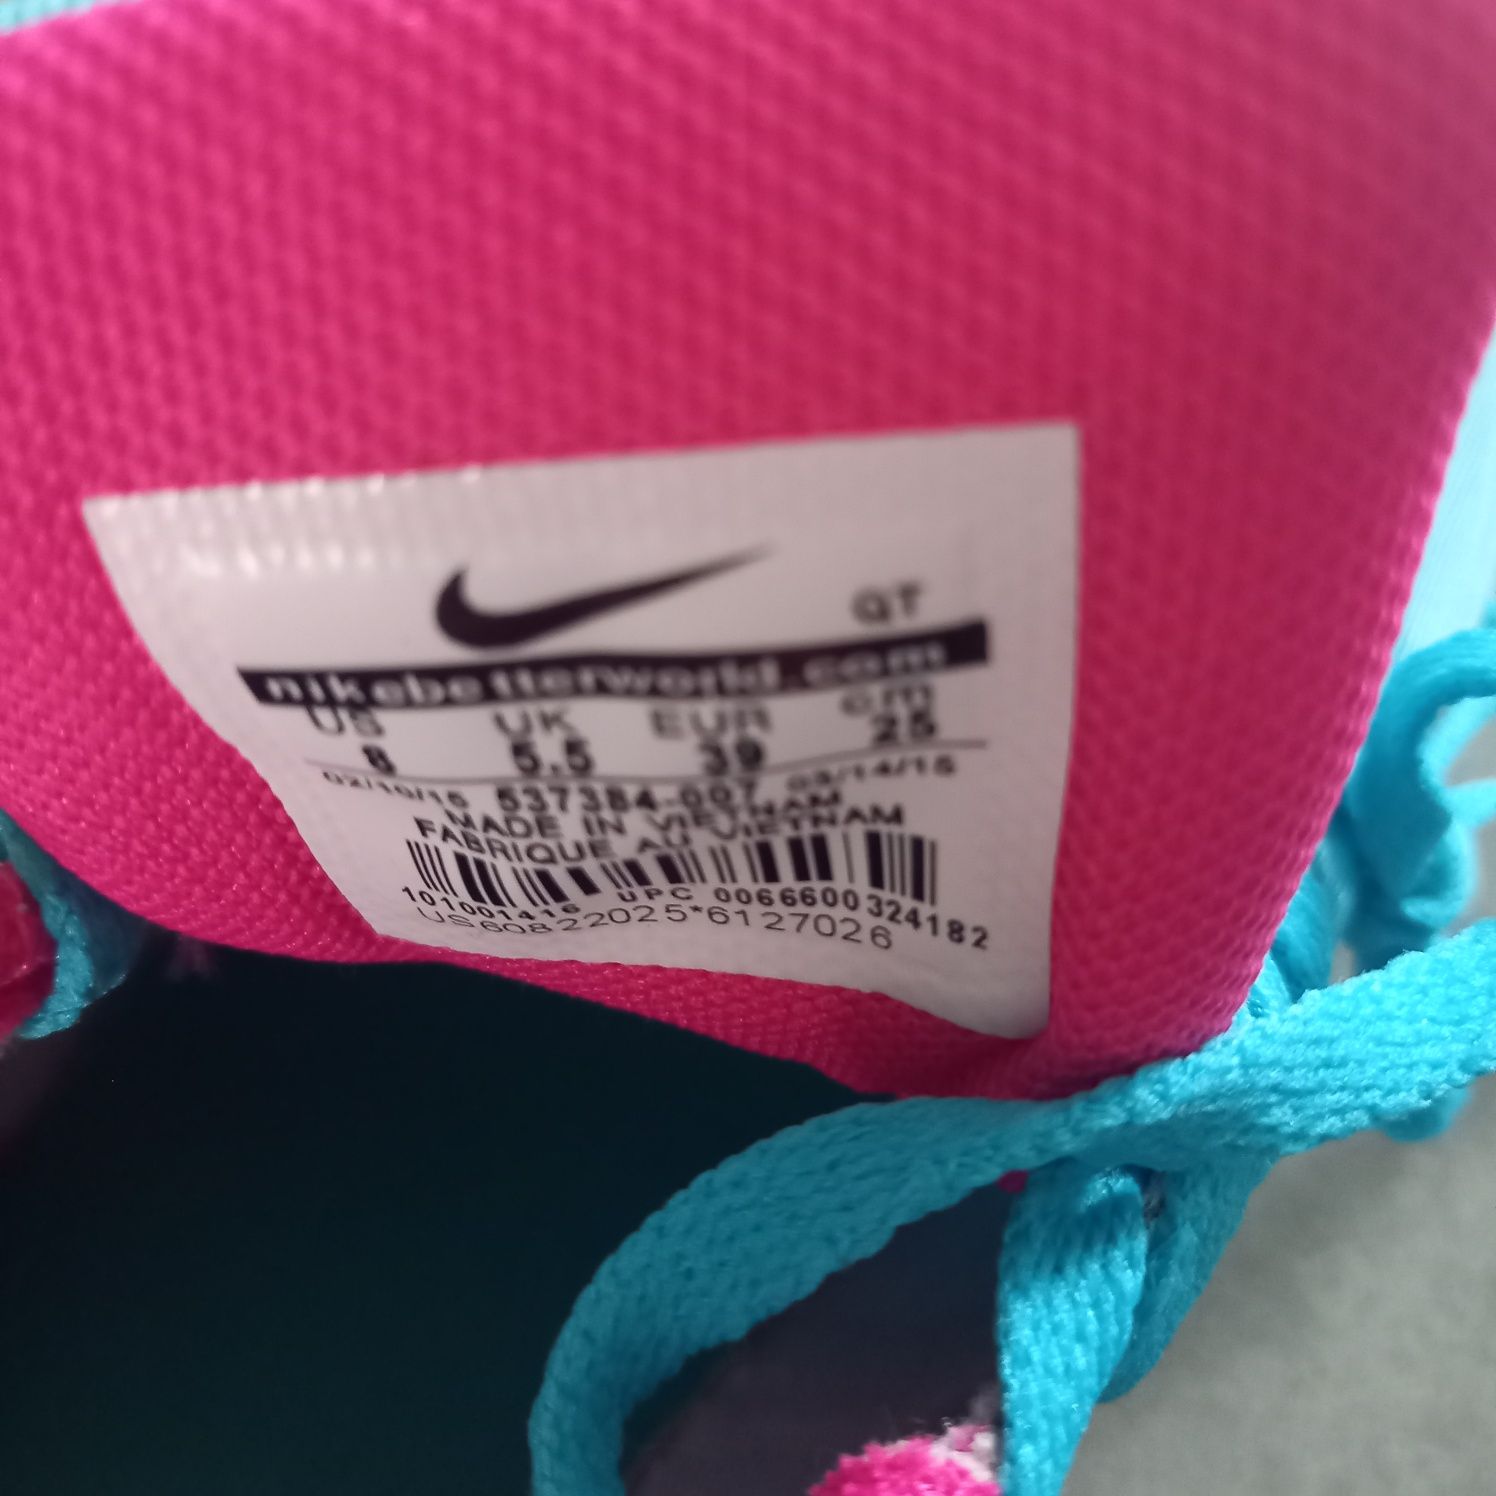 Adidasy nowe Nike